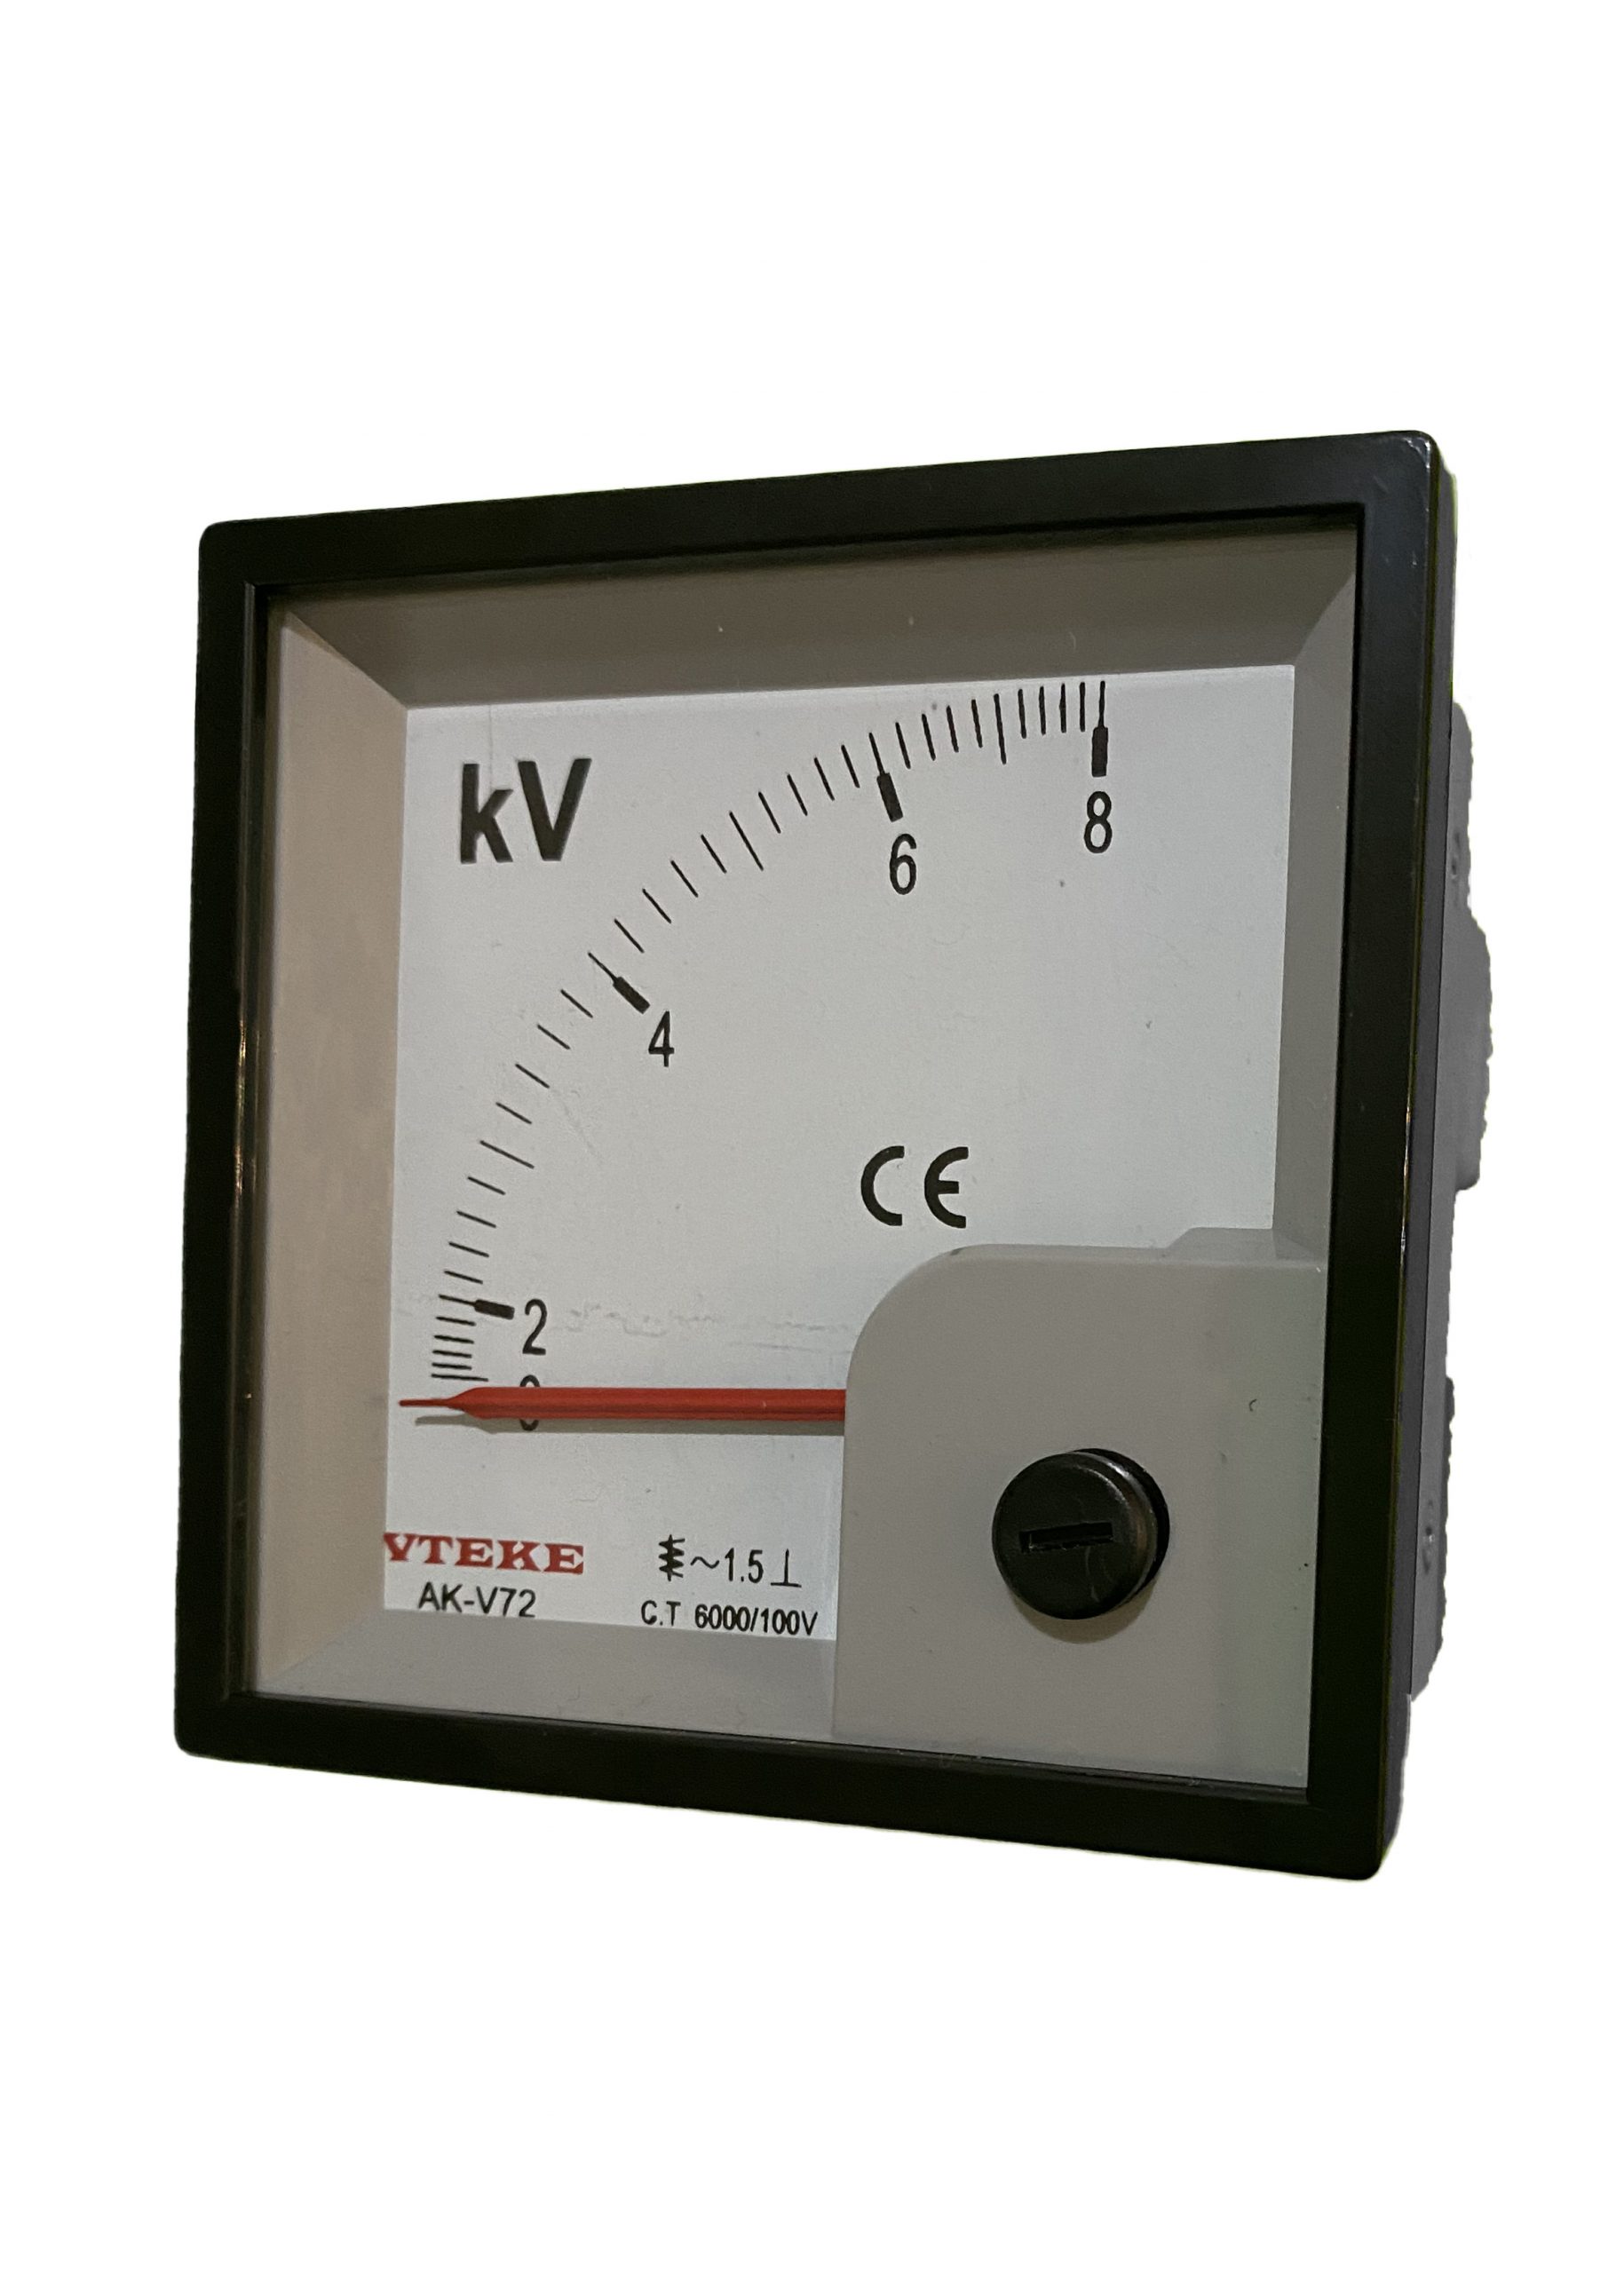 Analog Voltmeter Panel Meter, Voltage Measurement Tools